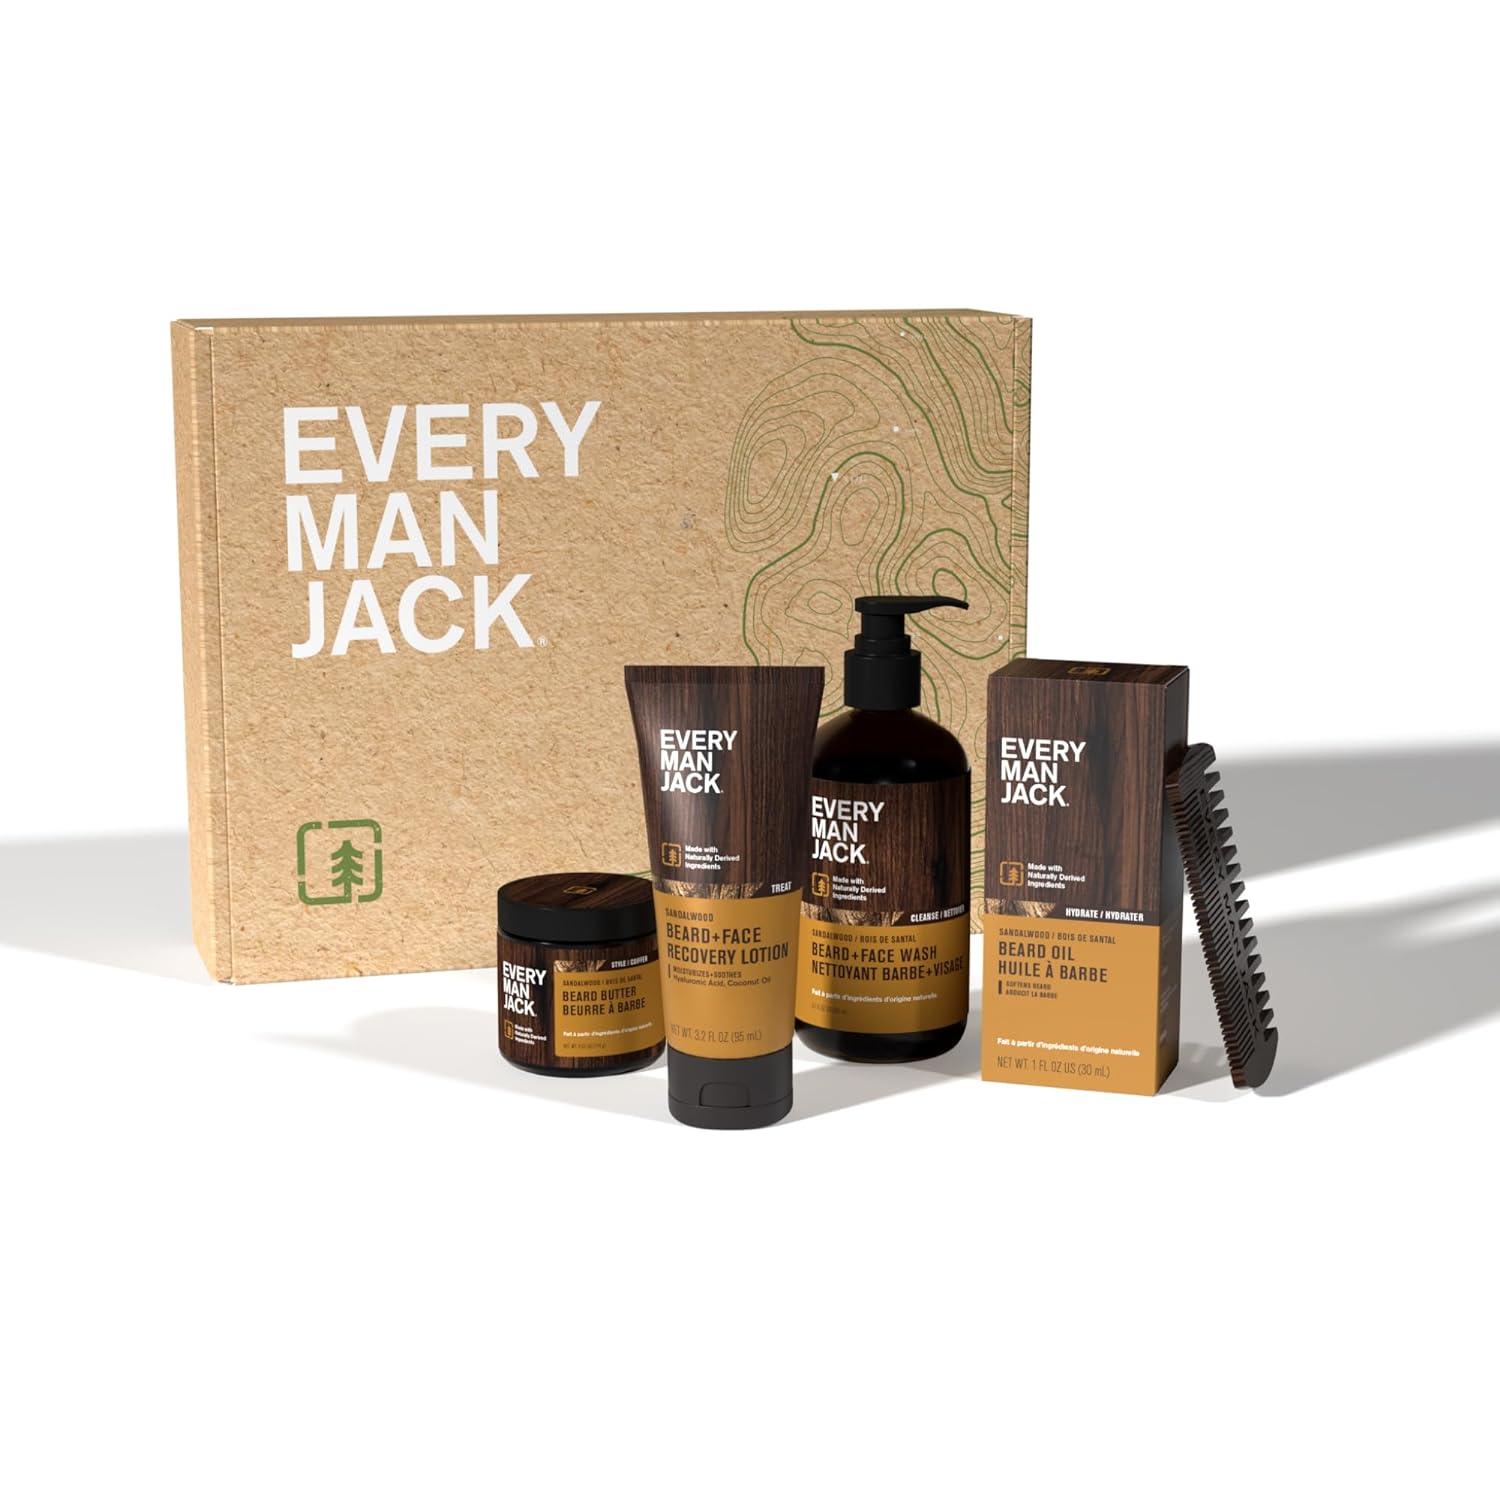 Every Man Jack Beard Tool Set - Studio Beard